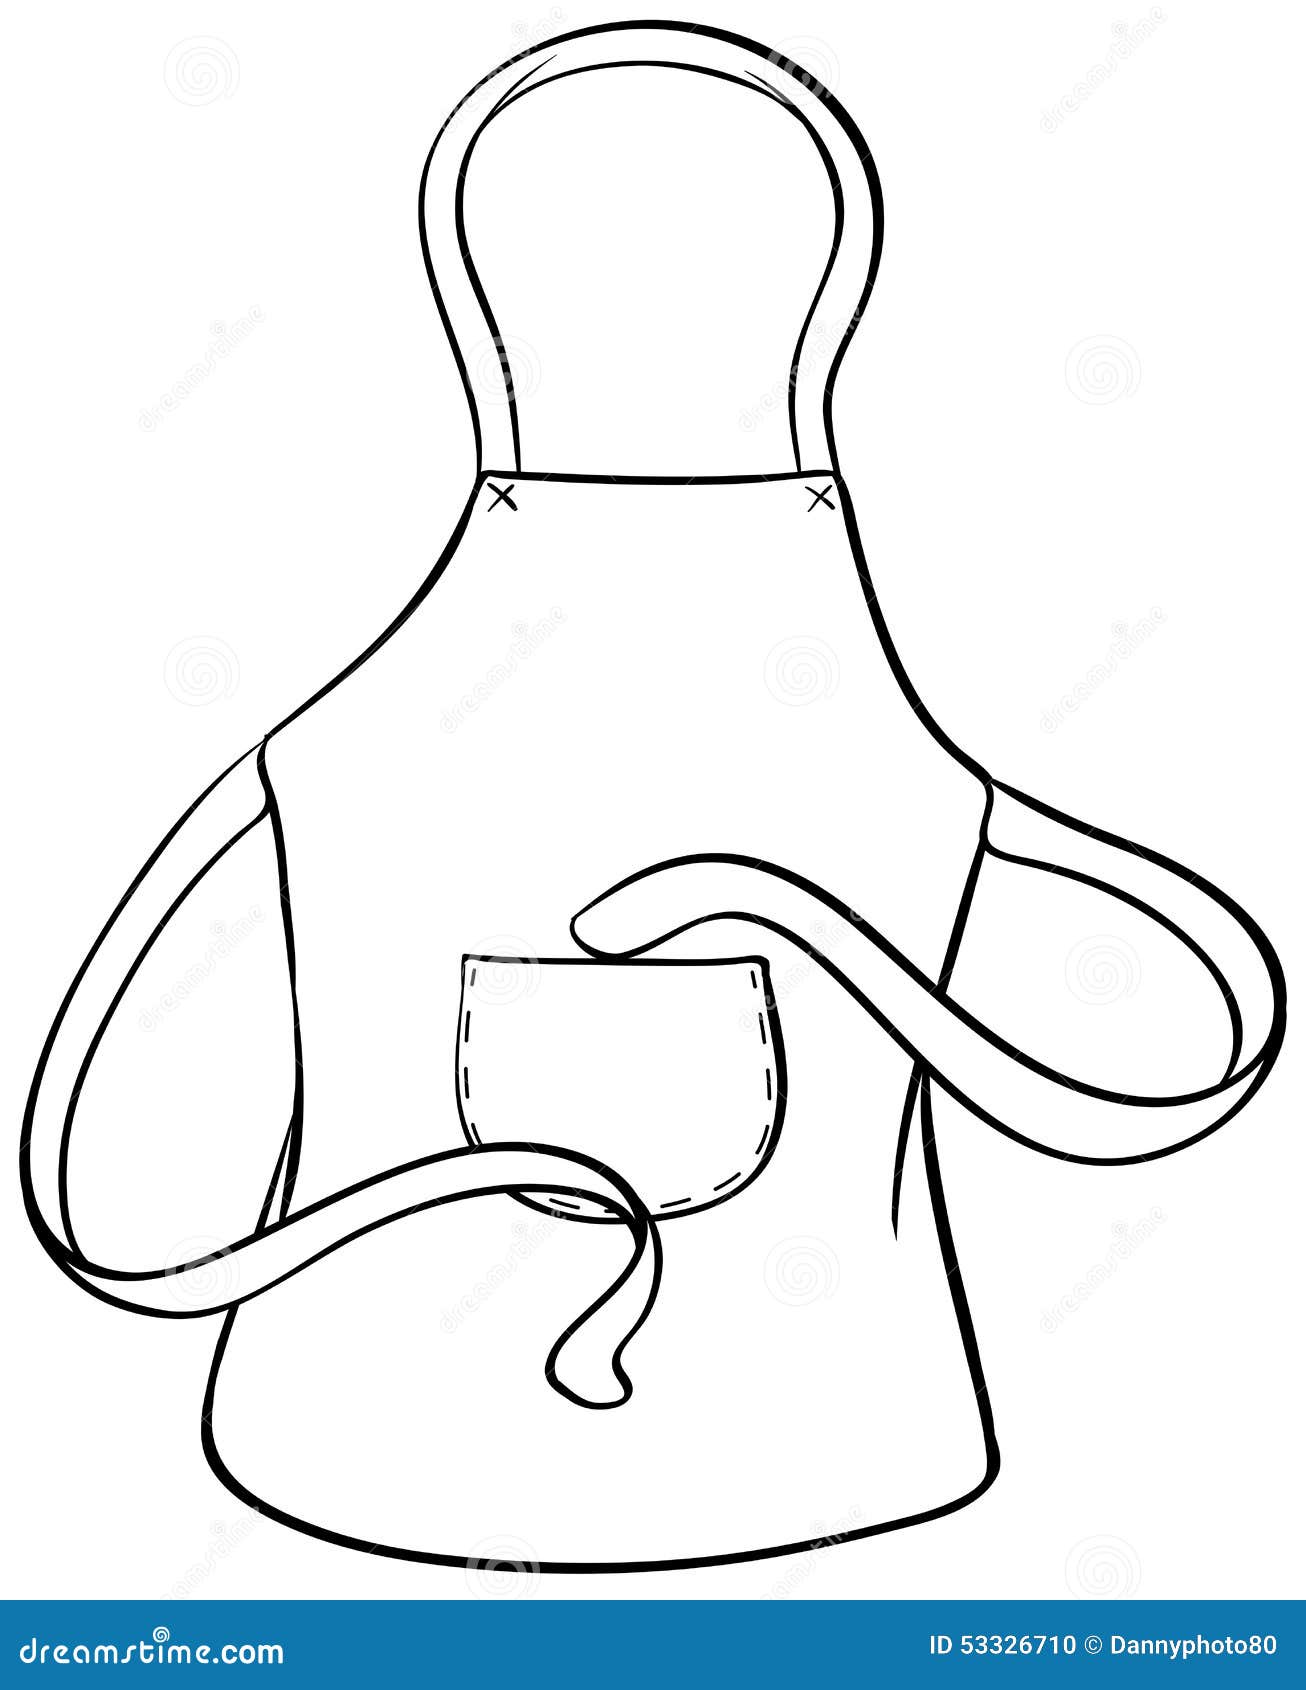 Apron stock vector. Illustration of apron, clipart, fashion   20